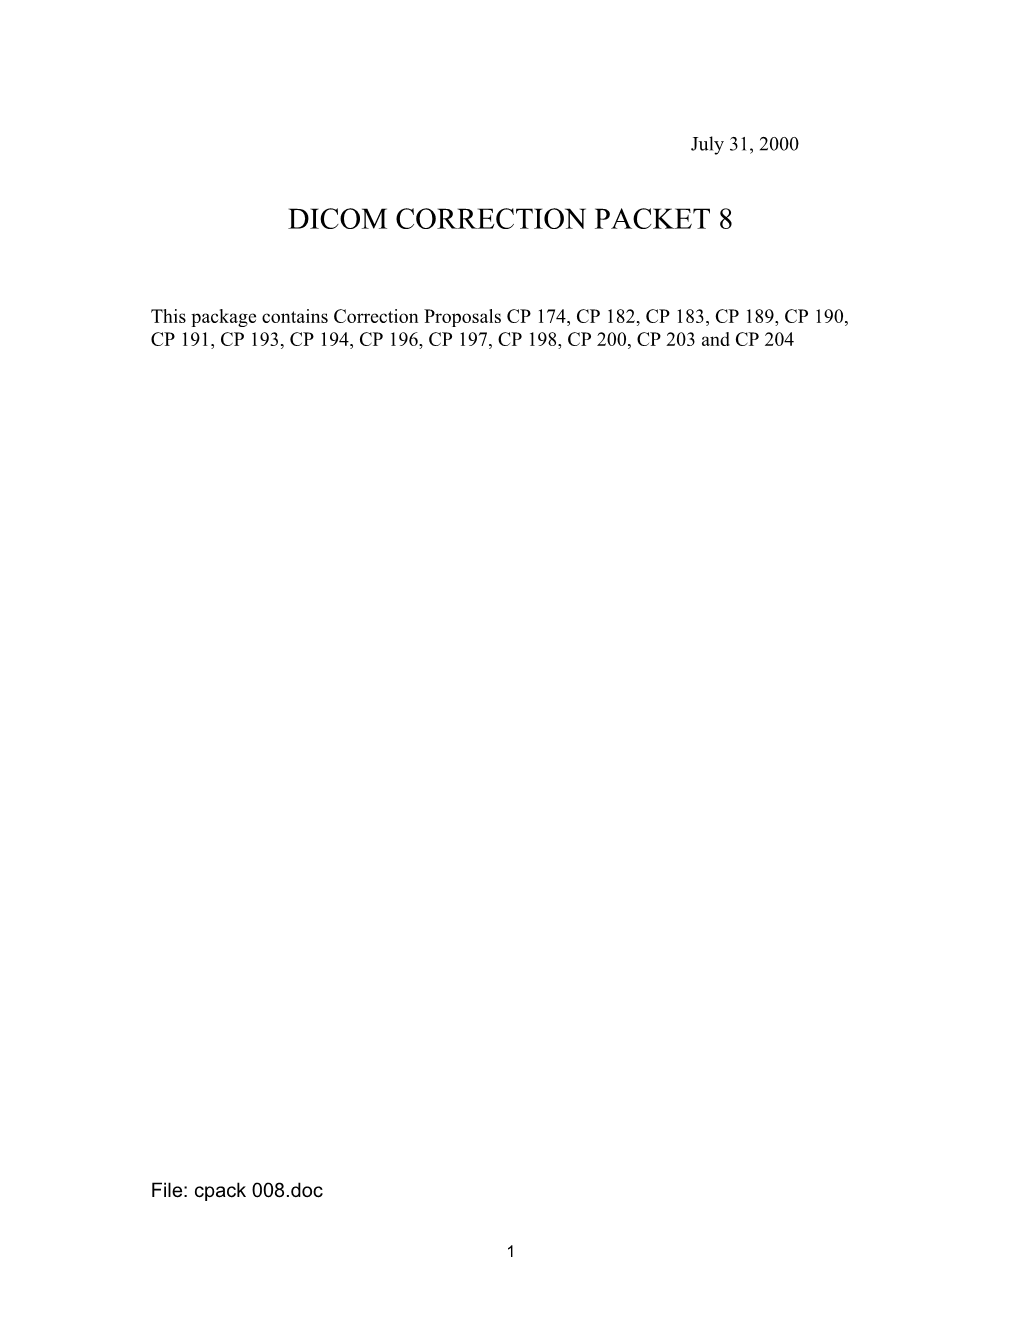 Dicom Correction Packet 8